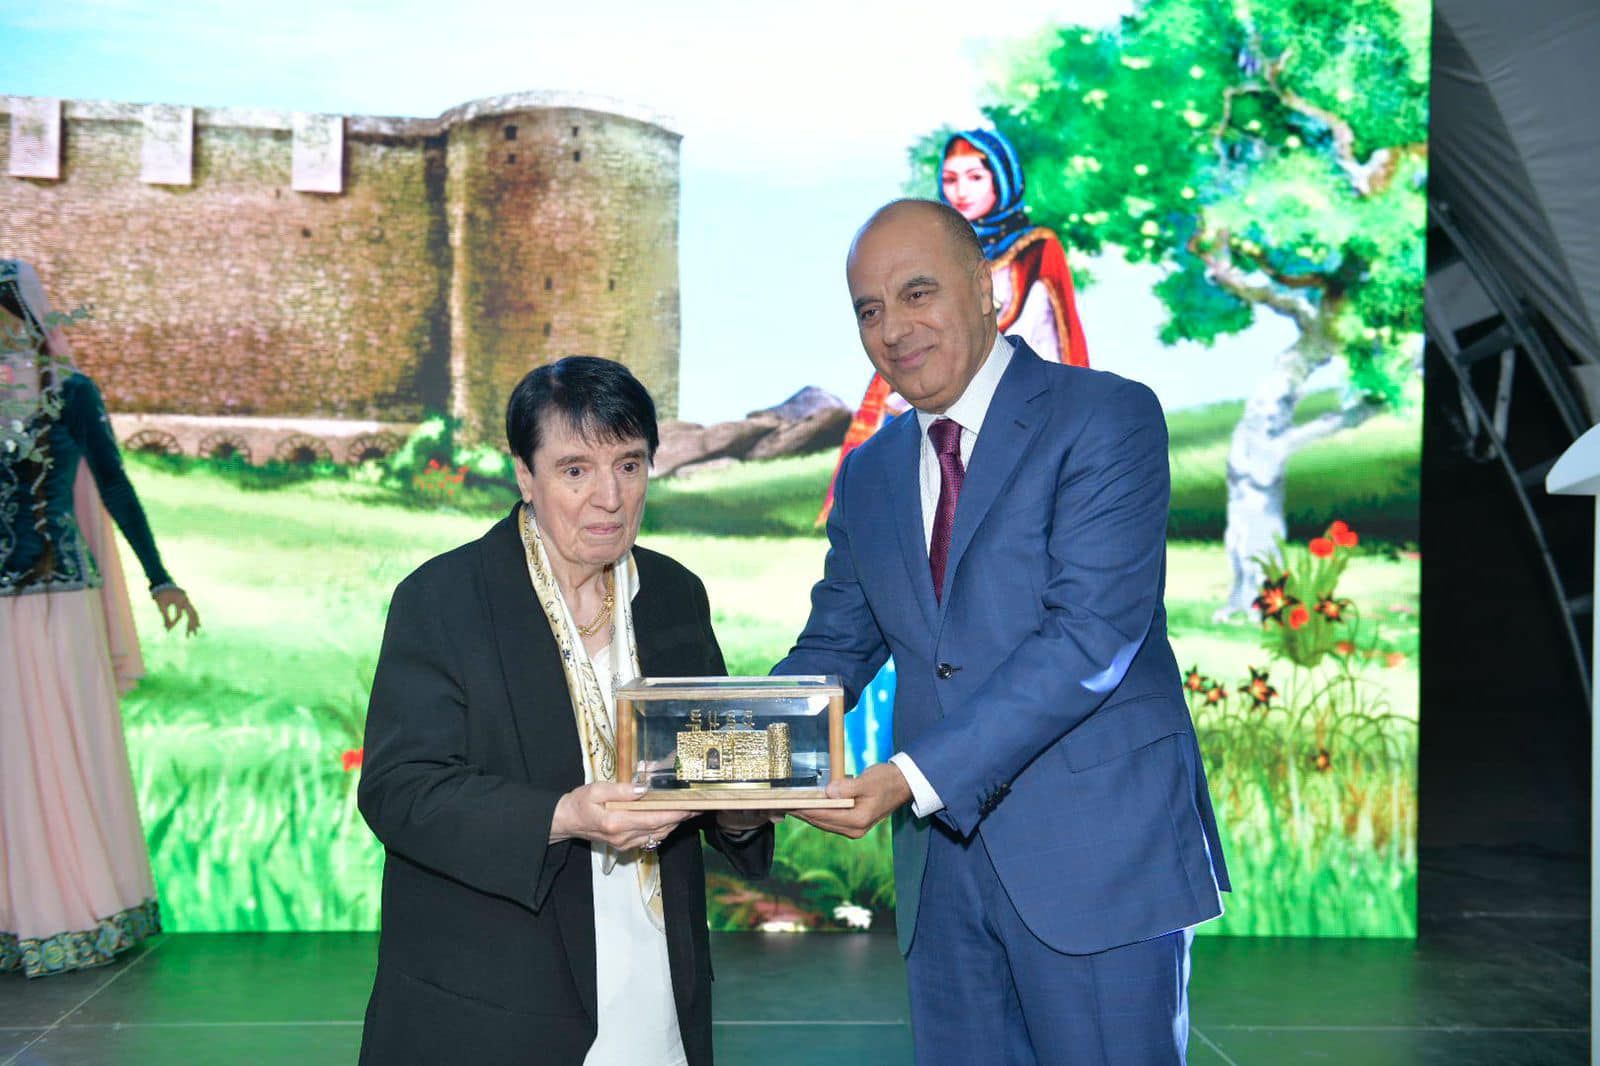 Azerbaijani historical city hosts Shusha Chess-2022 monumental tournament [PHOTO] - Gallery Image